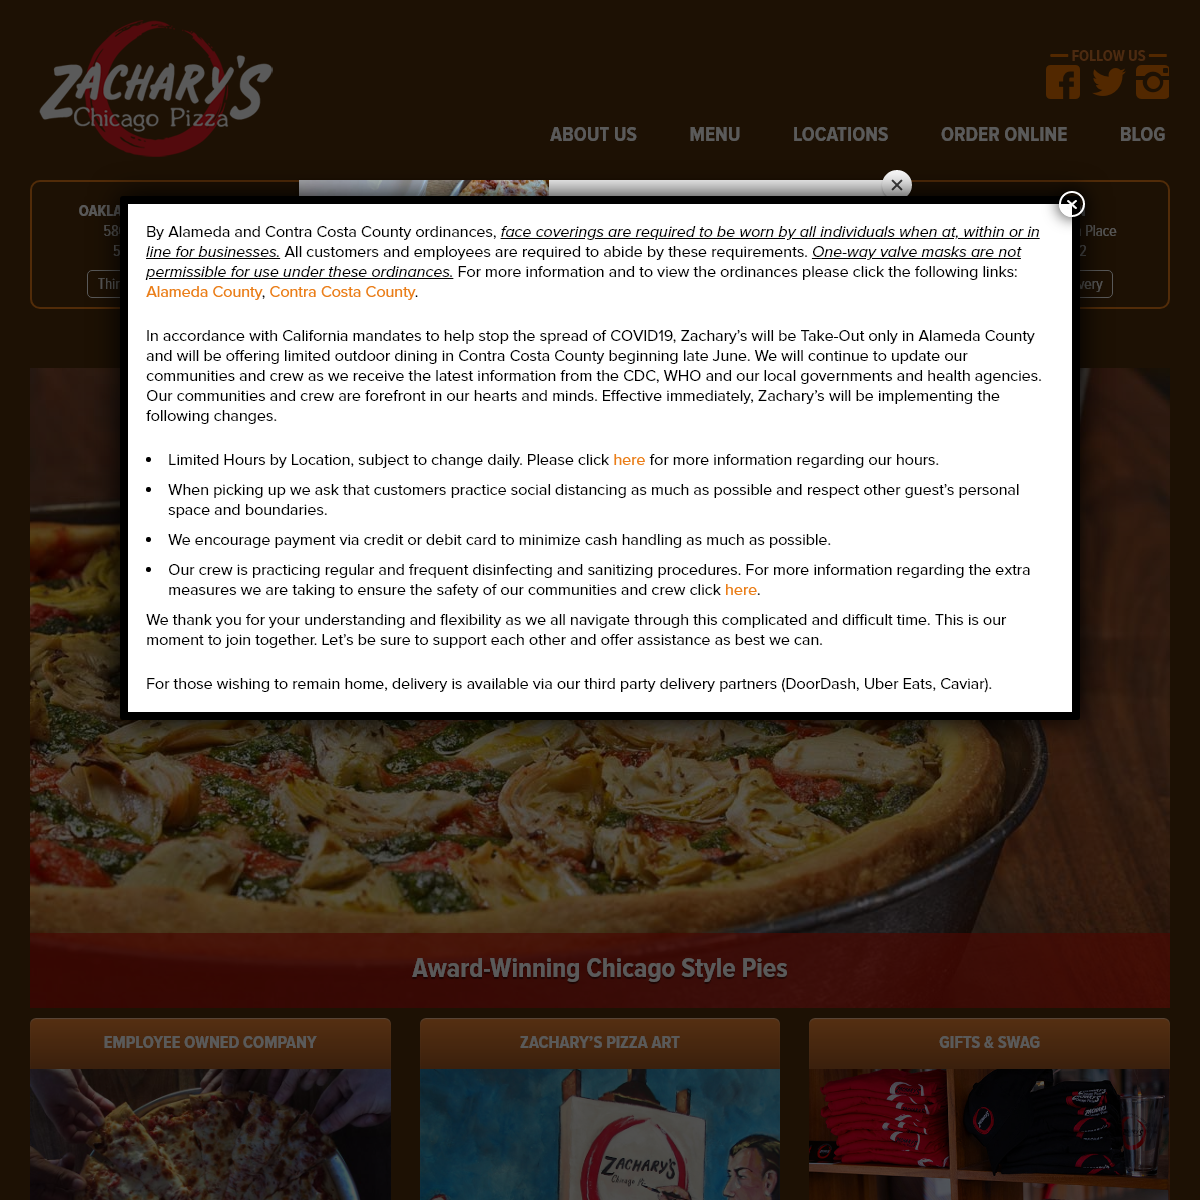 A complete backup of zacharys.com